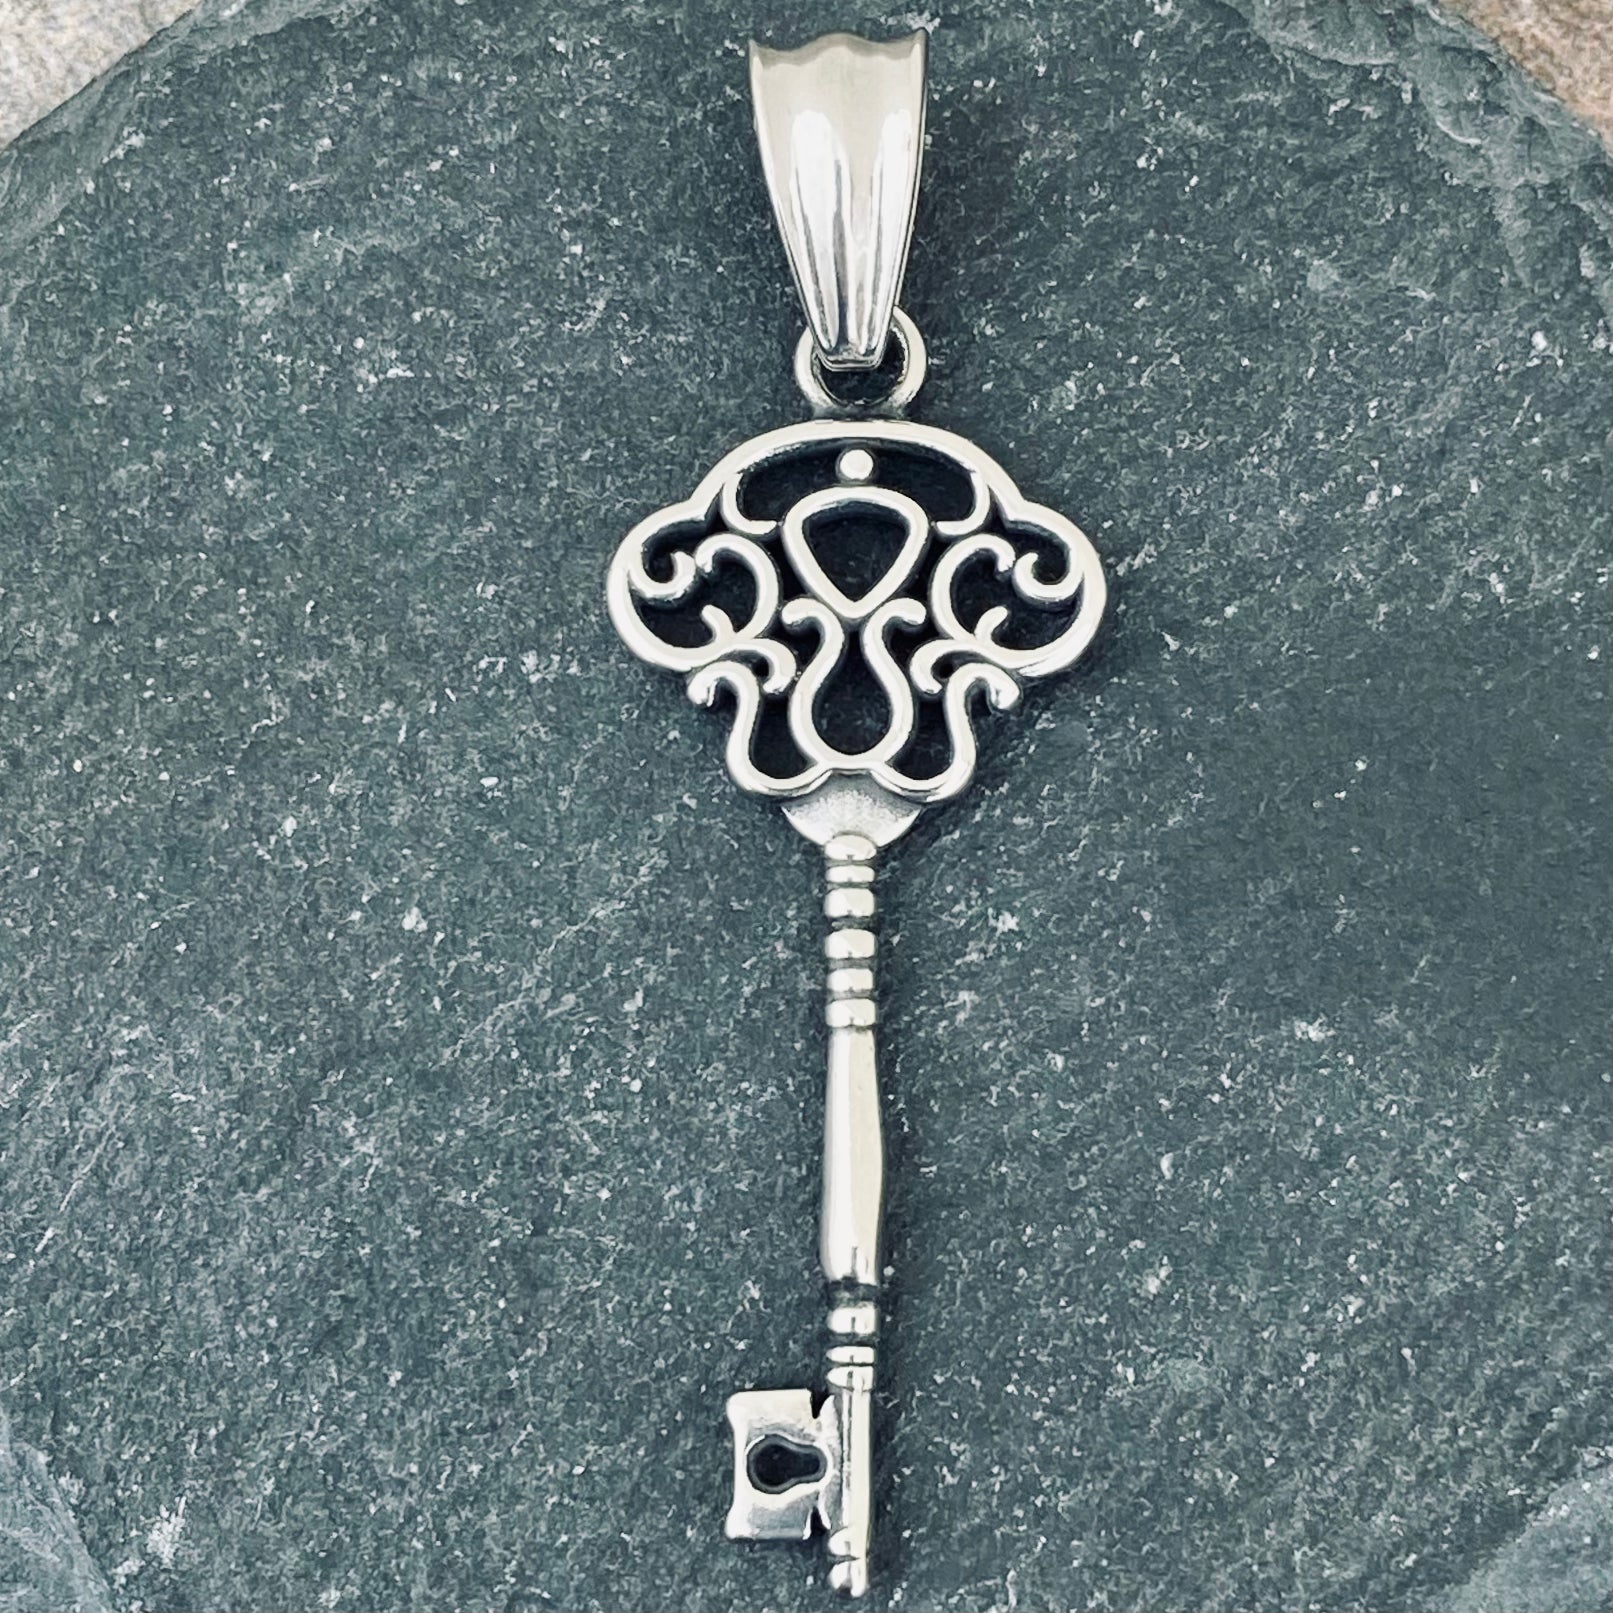 key pendant necklace